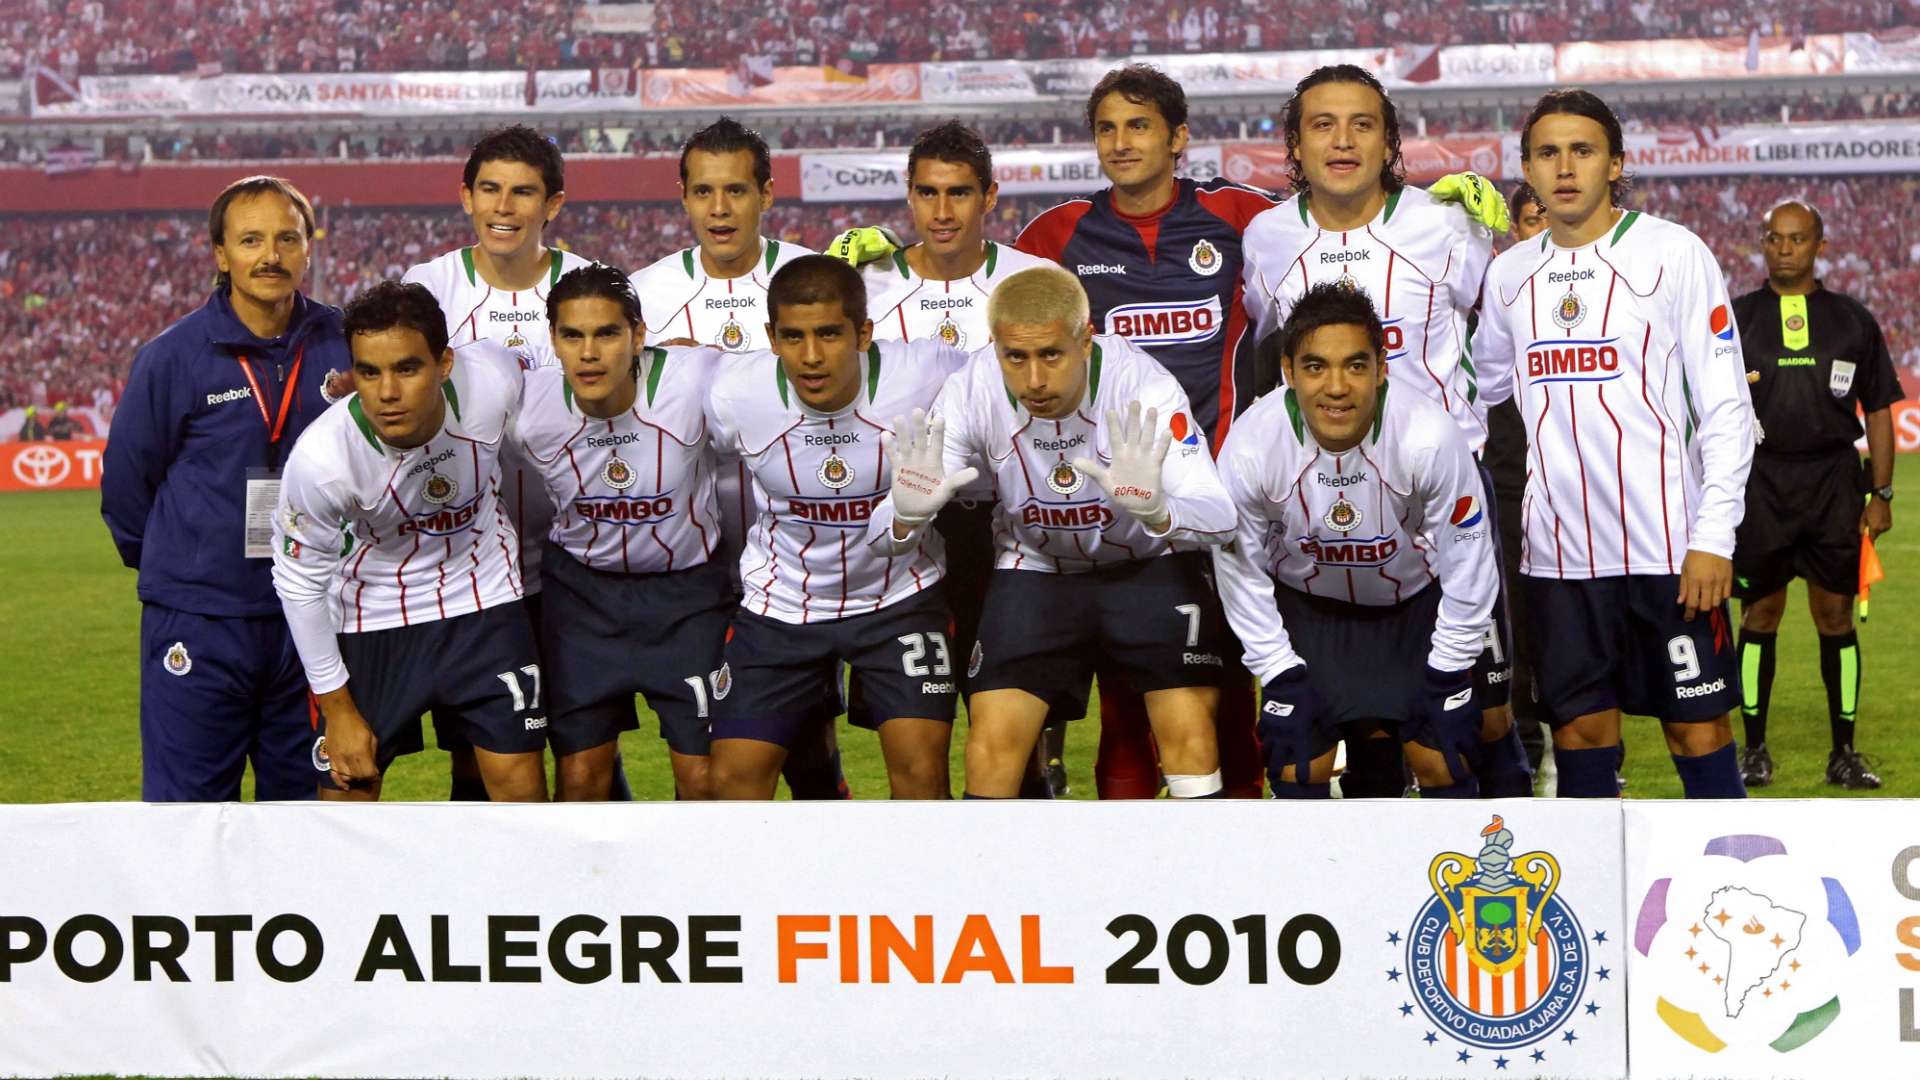 Chivas Libertadores 2010